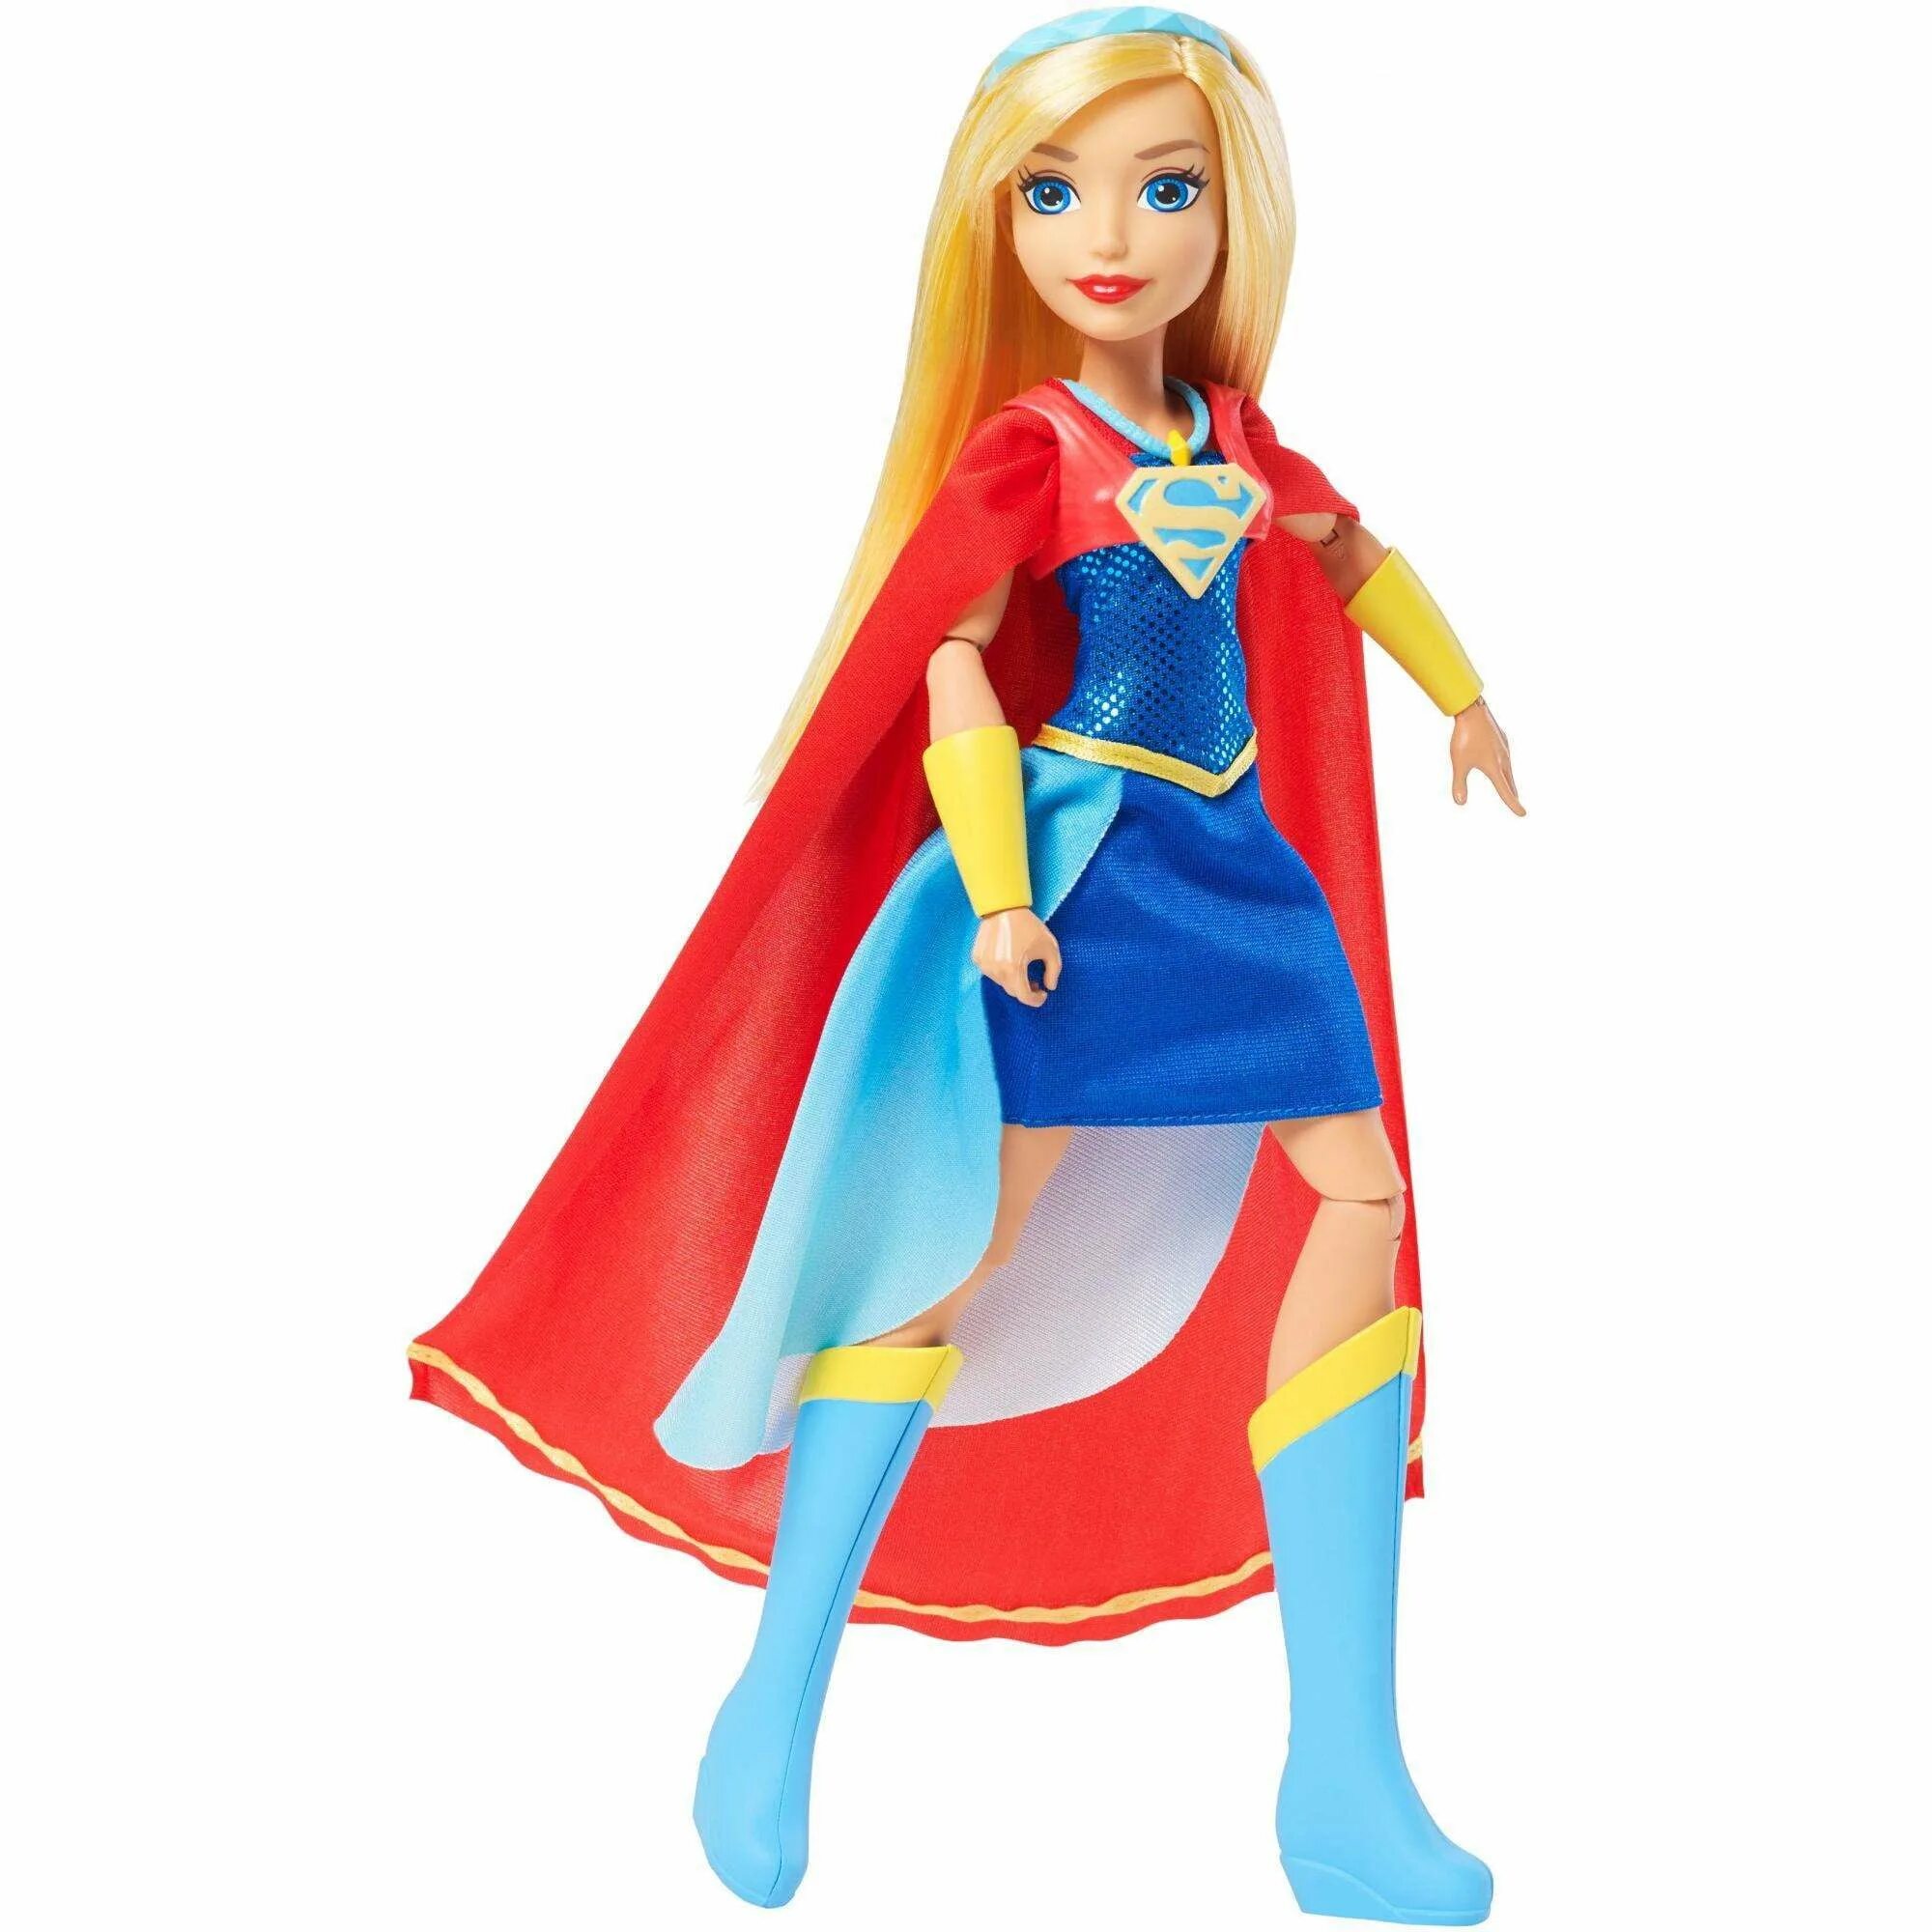 DC super Hero girls супергерлкукла. Куклы ДС супер Хиро герлз. Куклы DC super Hero girls Supergirl. ДС супер Хиро герлз Супергерл кукла. Super doll